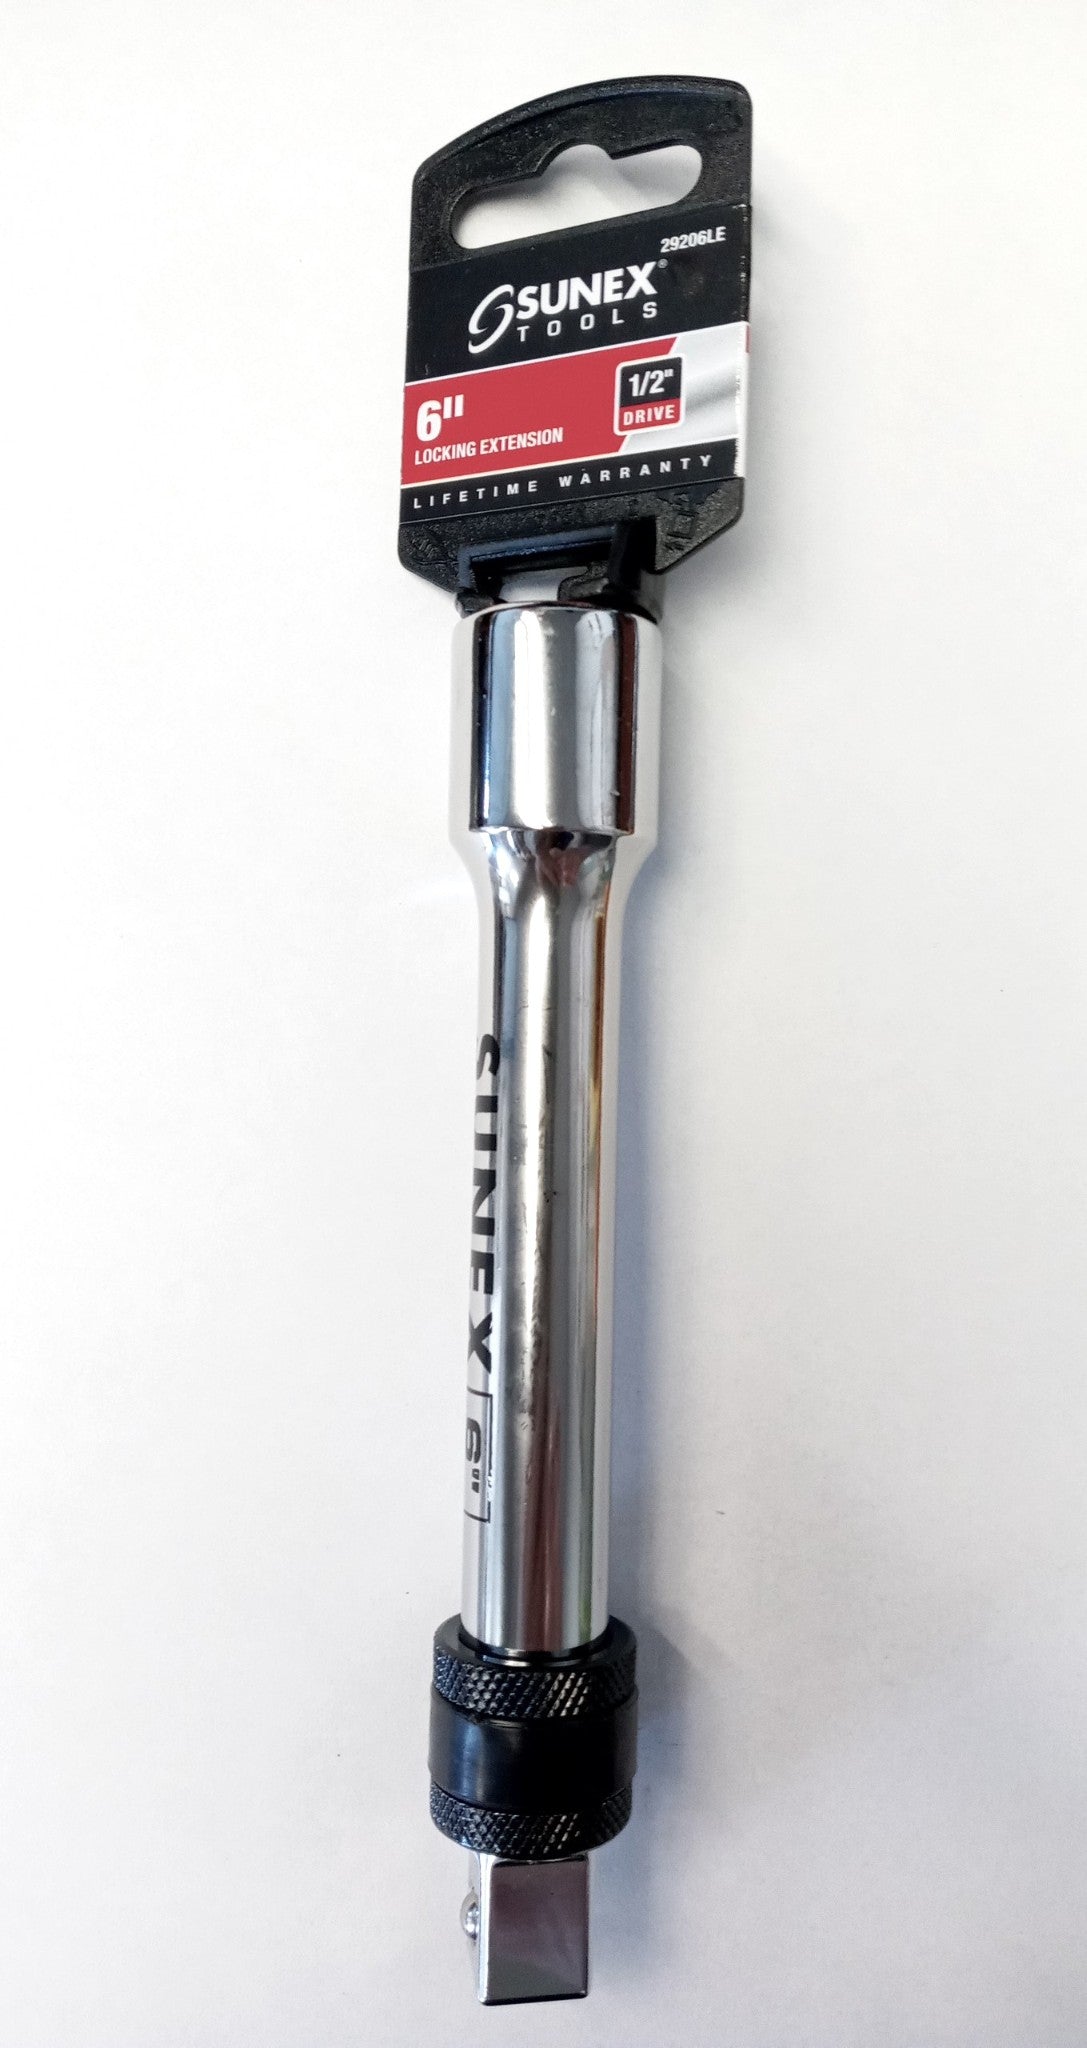 Sunex 29206LE Tools 1/2" x 6"  Drive Locking Socket Extension Bar